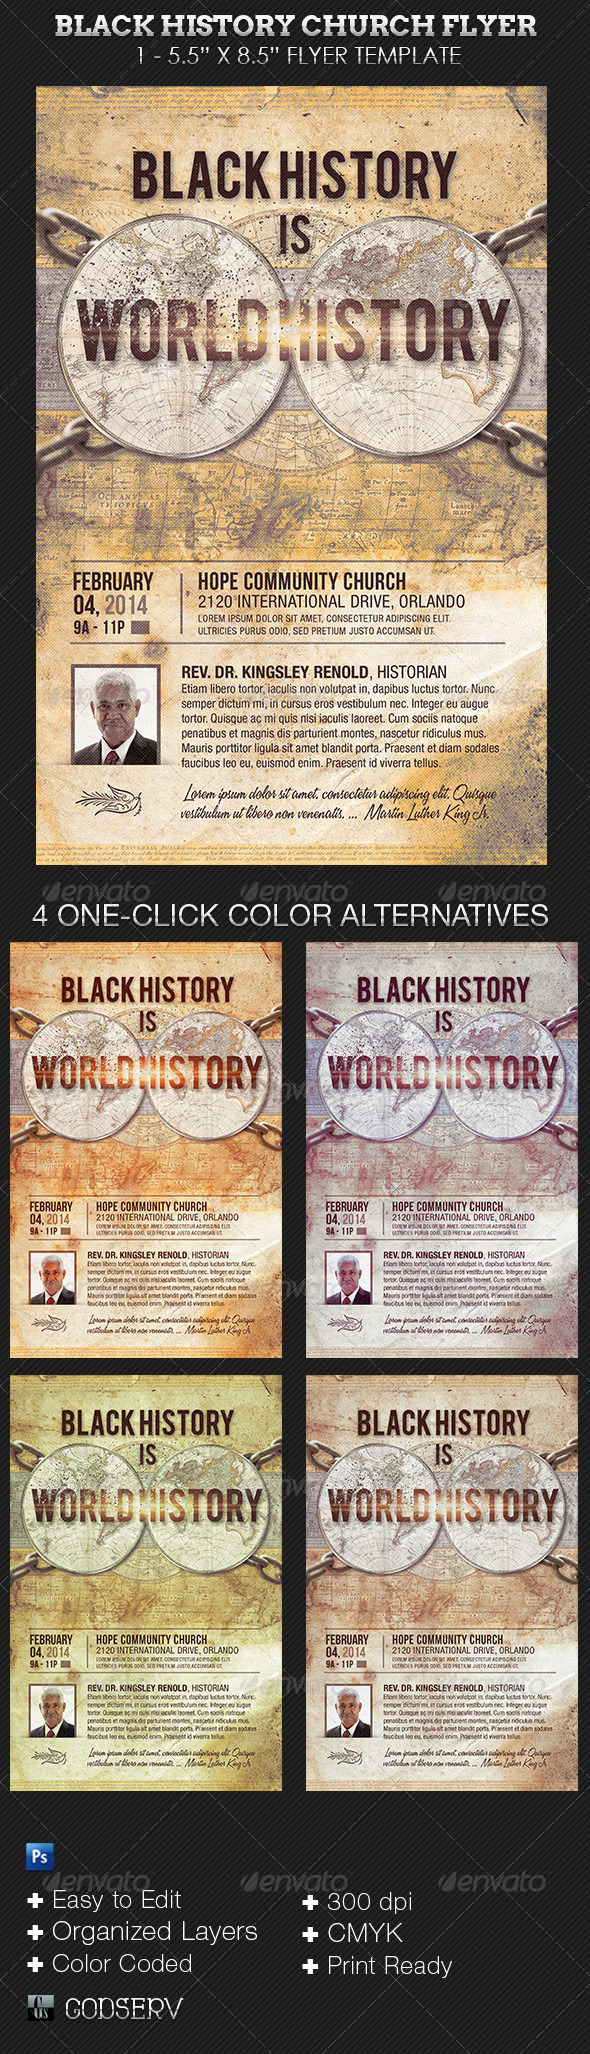 church black history programs